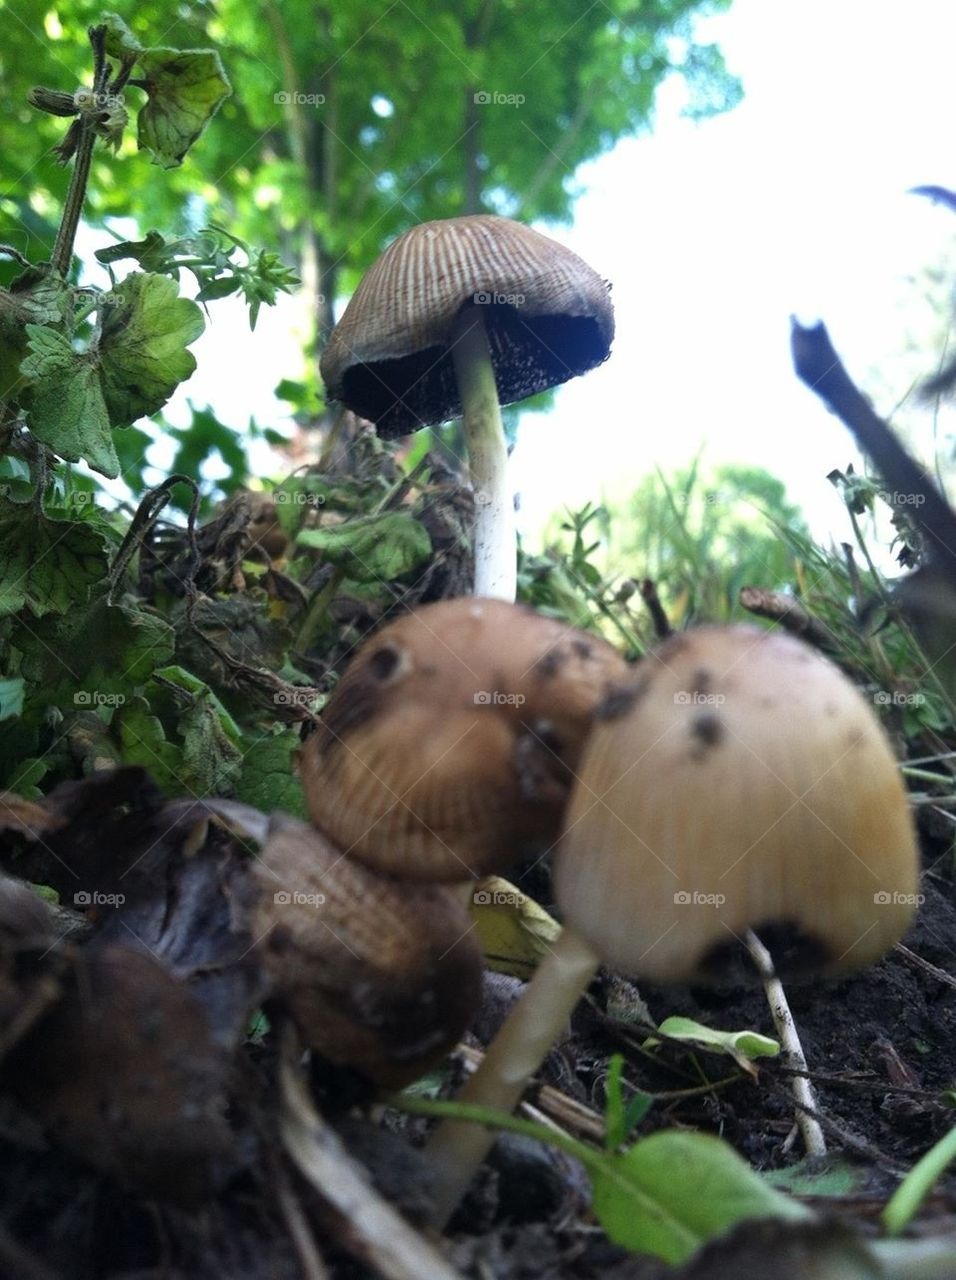 Fungi from underneath